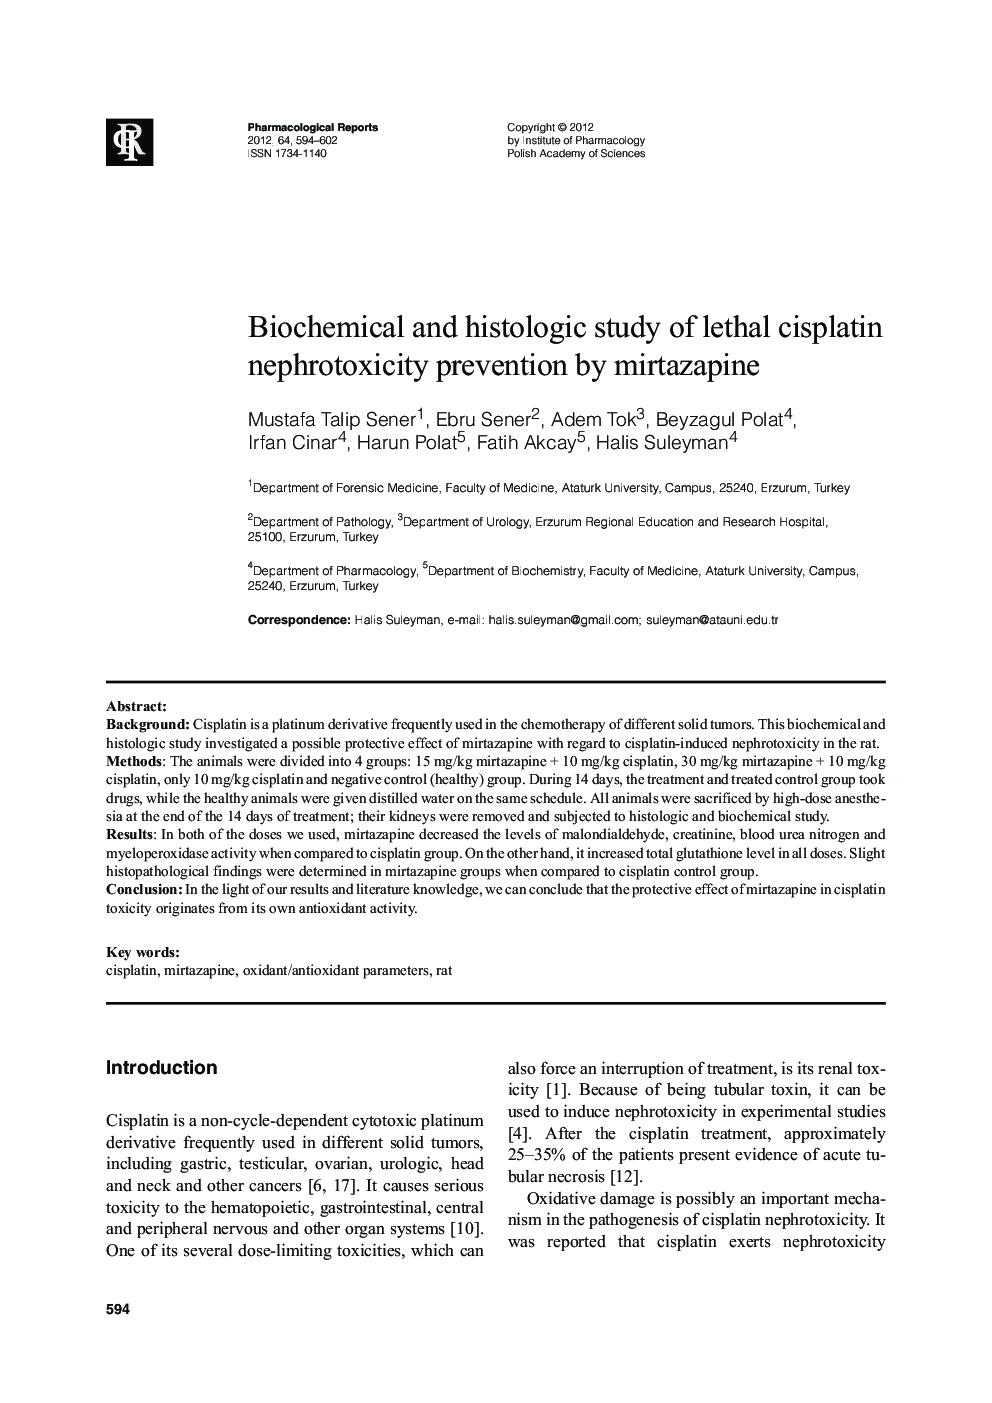 Biochemical and histologic study of lethal cisplatin nephrotoxicity prevention by mirtazapine